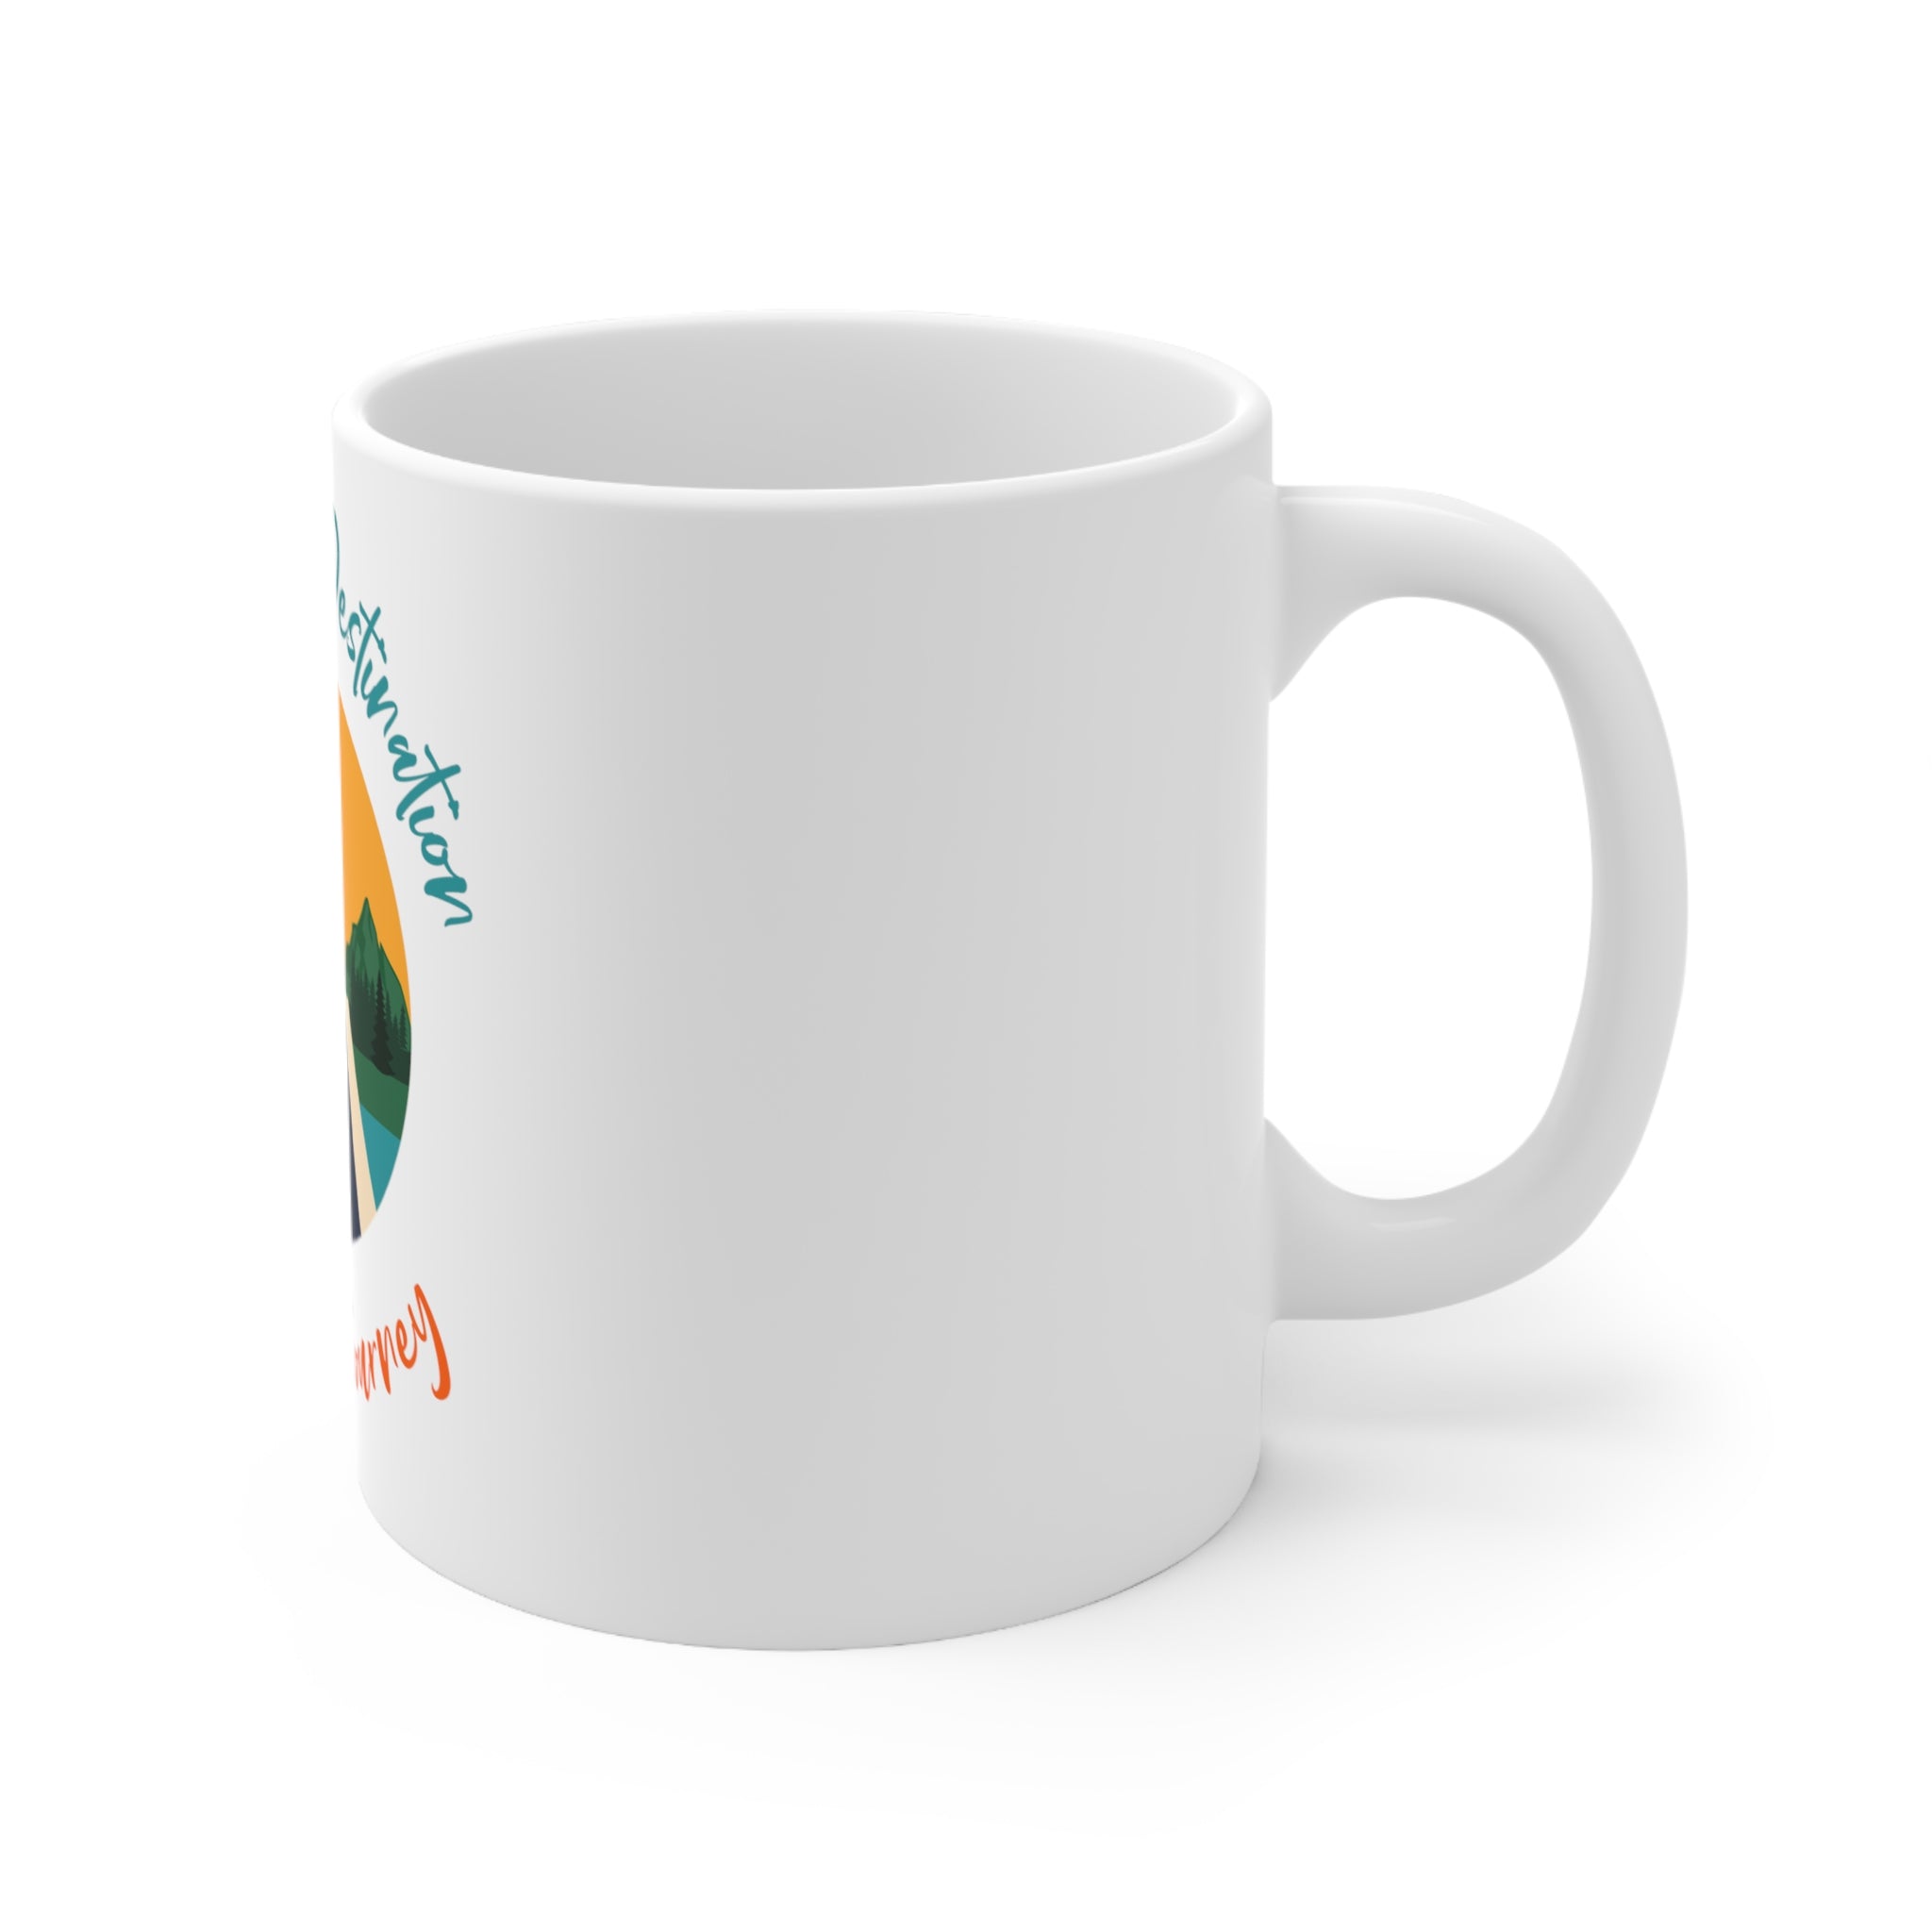 Daily vibes - Accent Coffee Mug, 11oz (UK/USA/AUS)